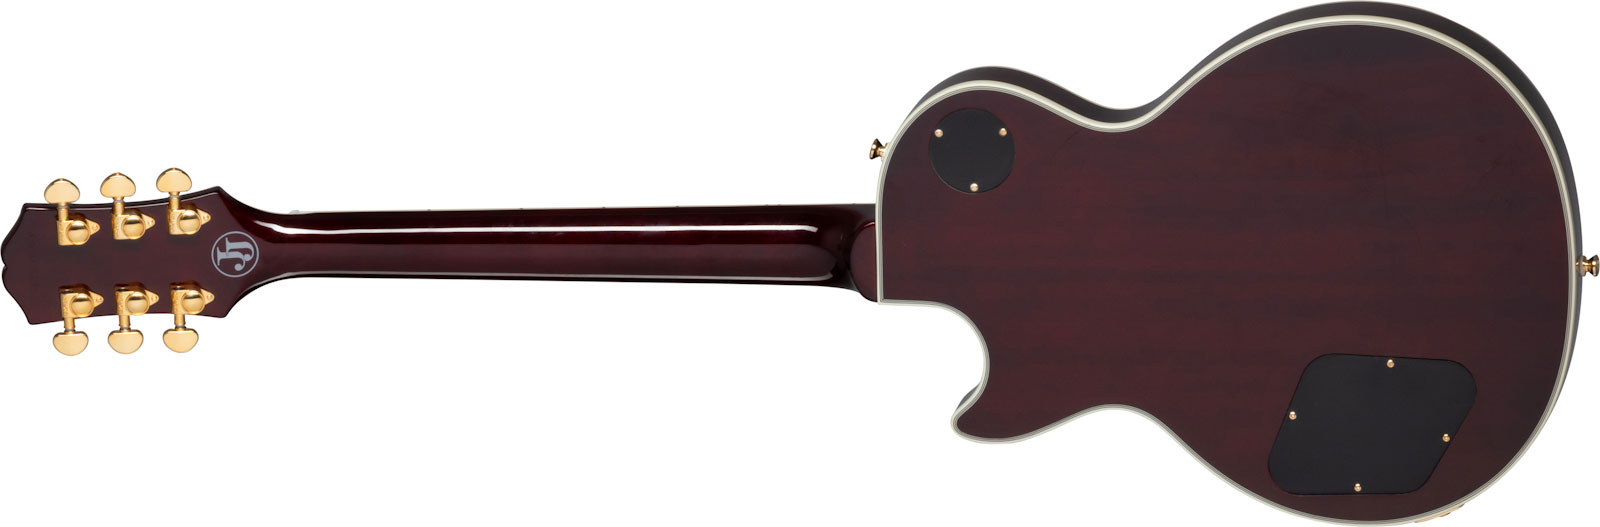 Epiphone Jerry Cantrell Les Paul Custom Wino Signature 2h Ht Eb - Wine Red - Enkel gesneden elektrische gitaar - Variation 1